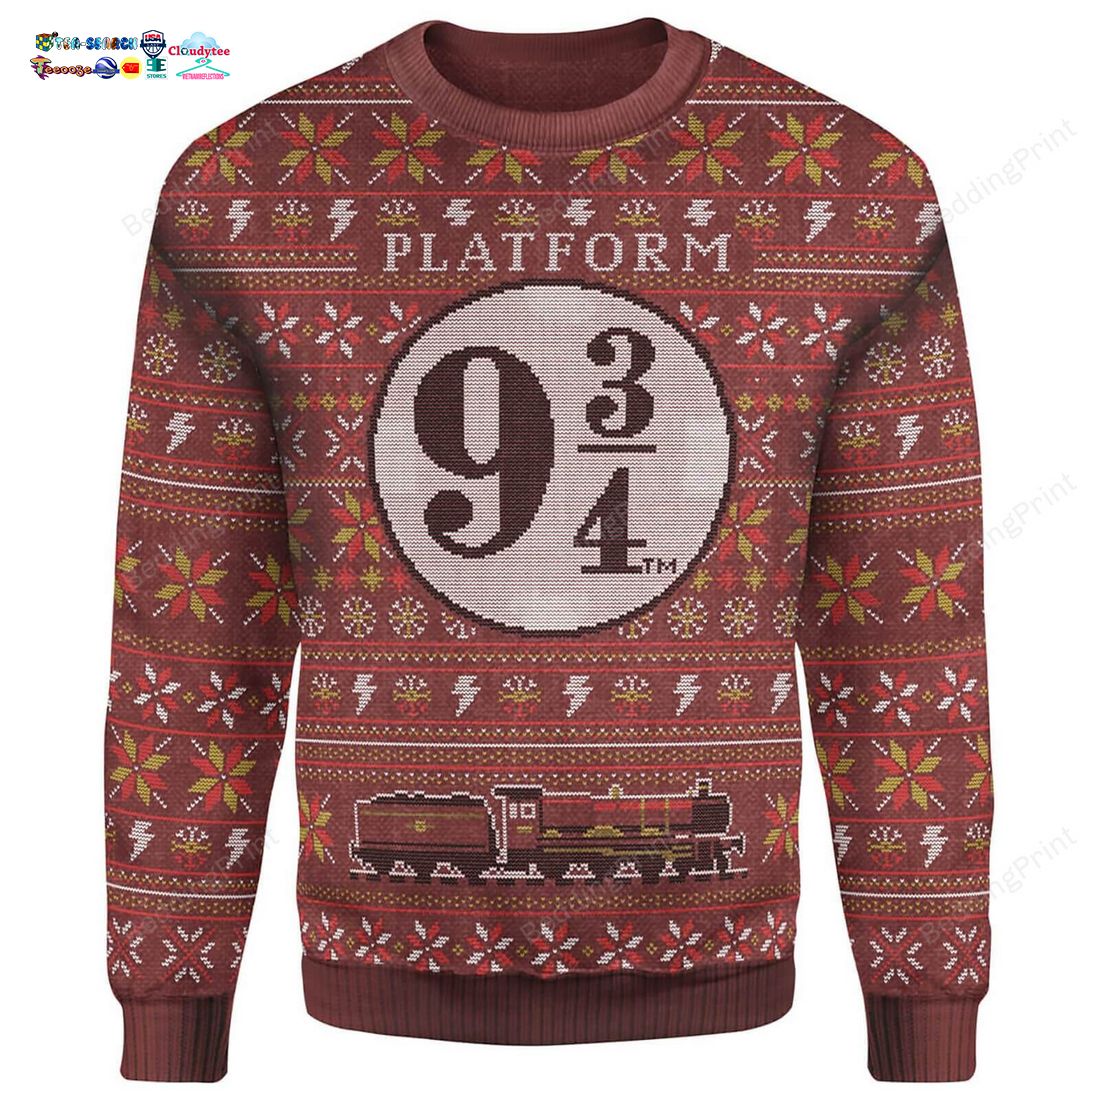 Harry Potter Platform Nine And Three-Quarters Ugly Christmas Sweater